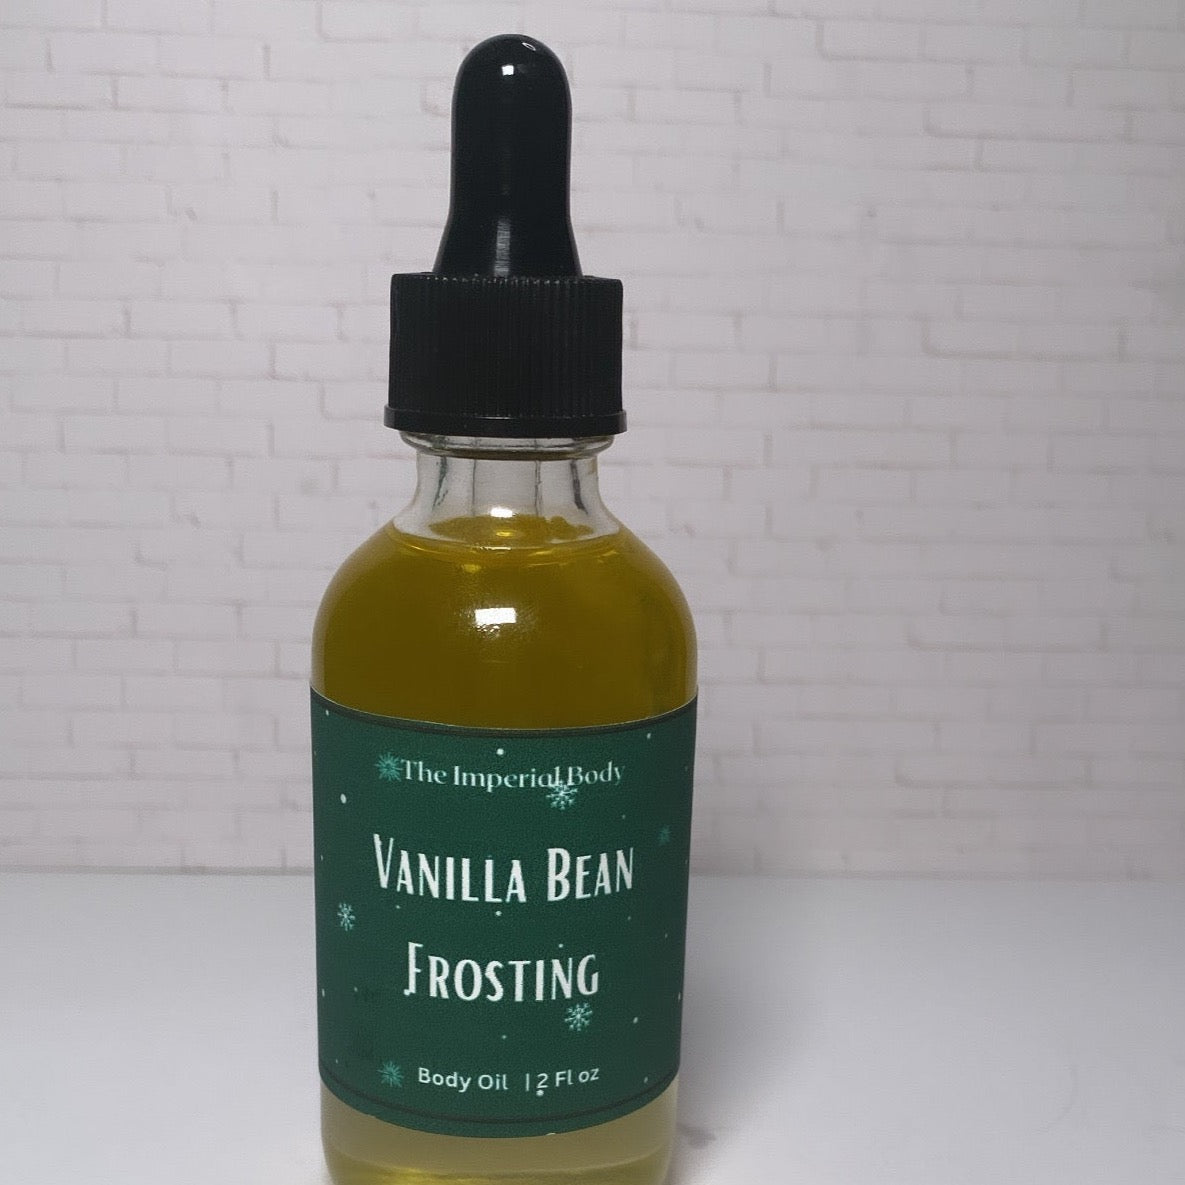 Vanilla Bean Frosting Body Oil